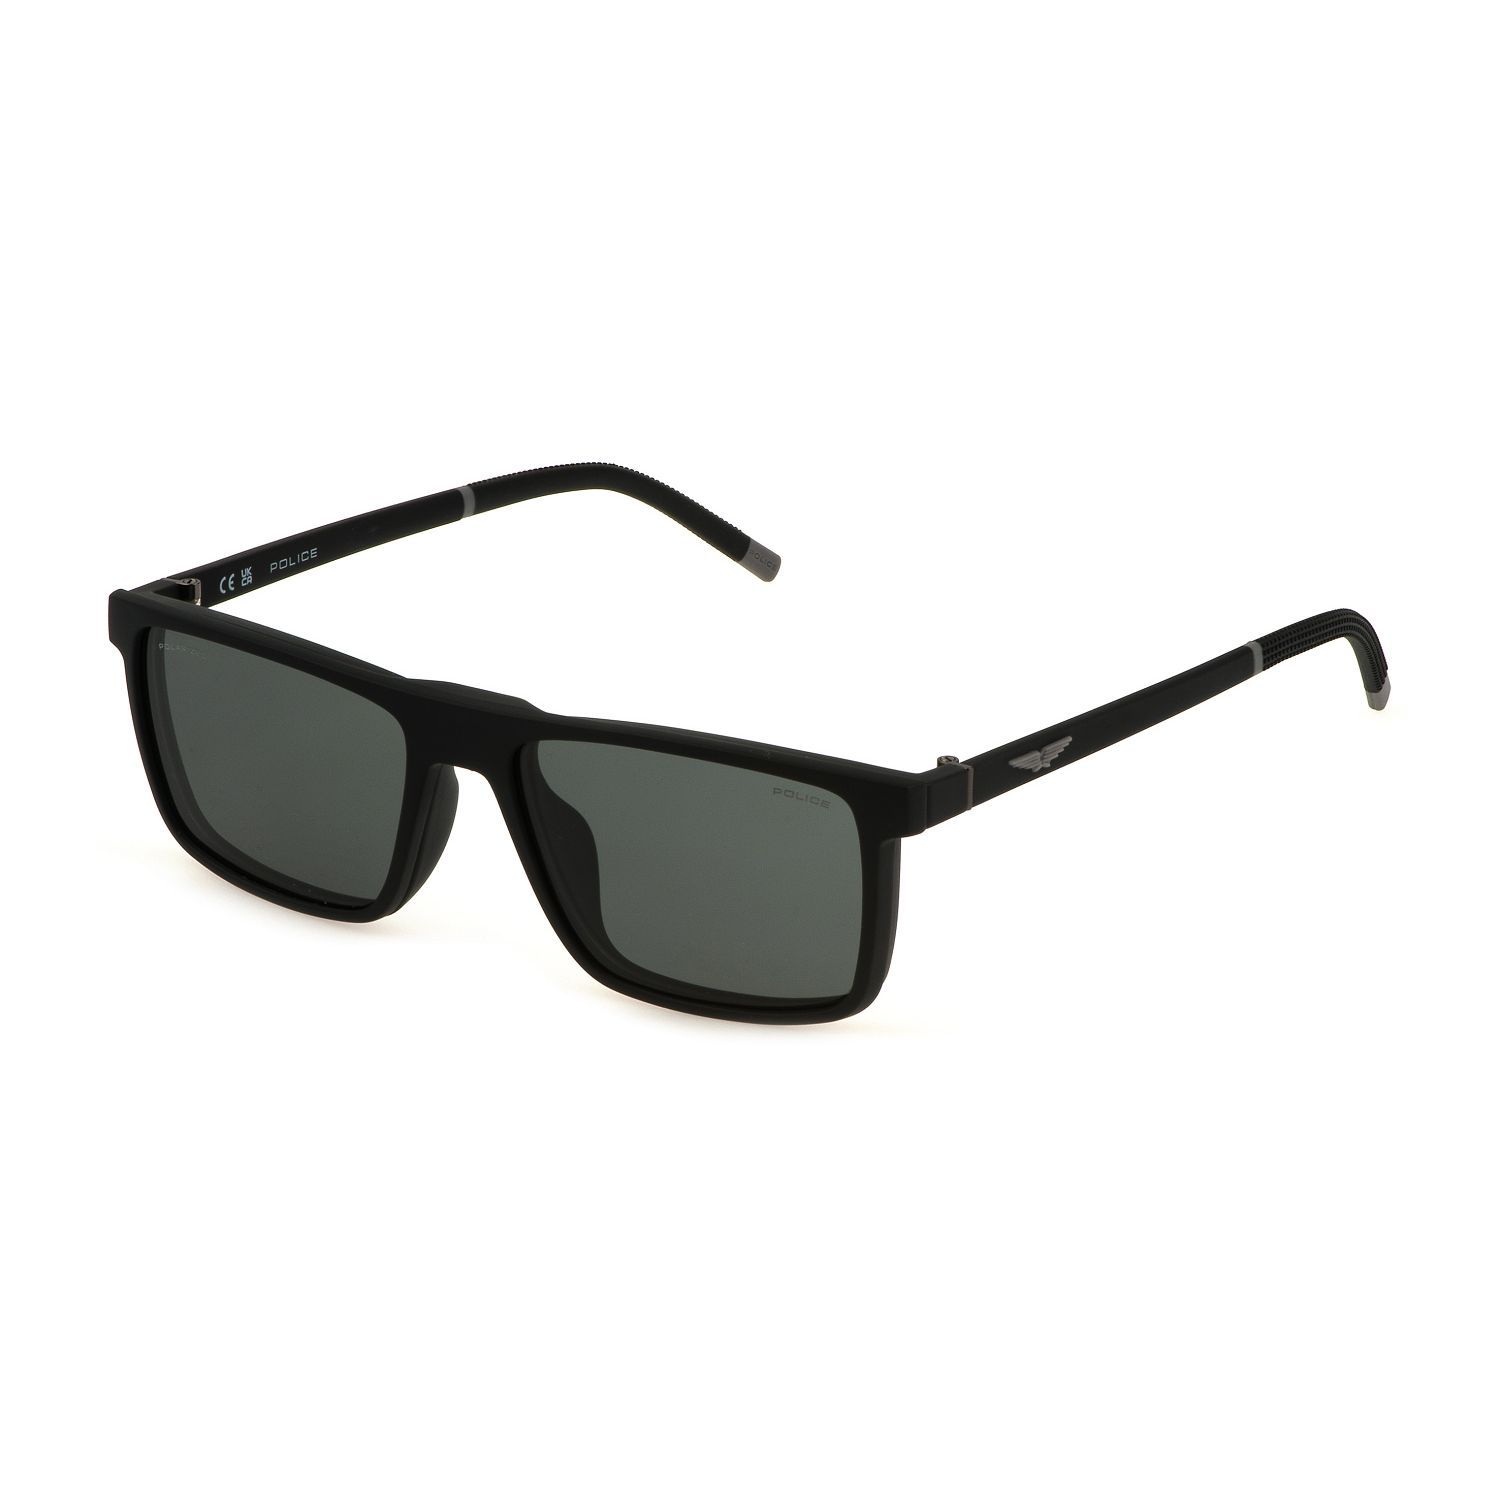 UPLL74M Square Sunglasses U28P - size 54